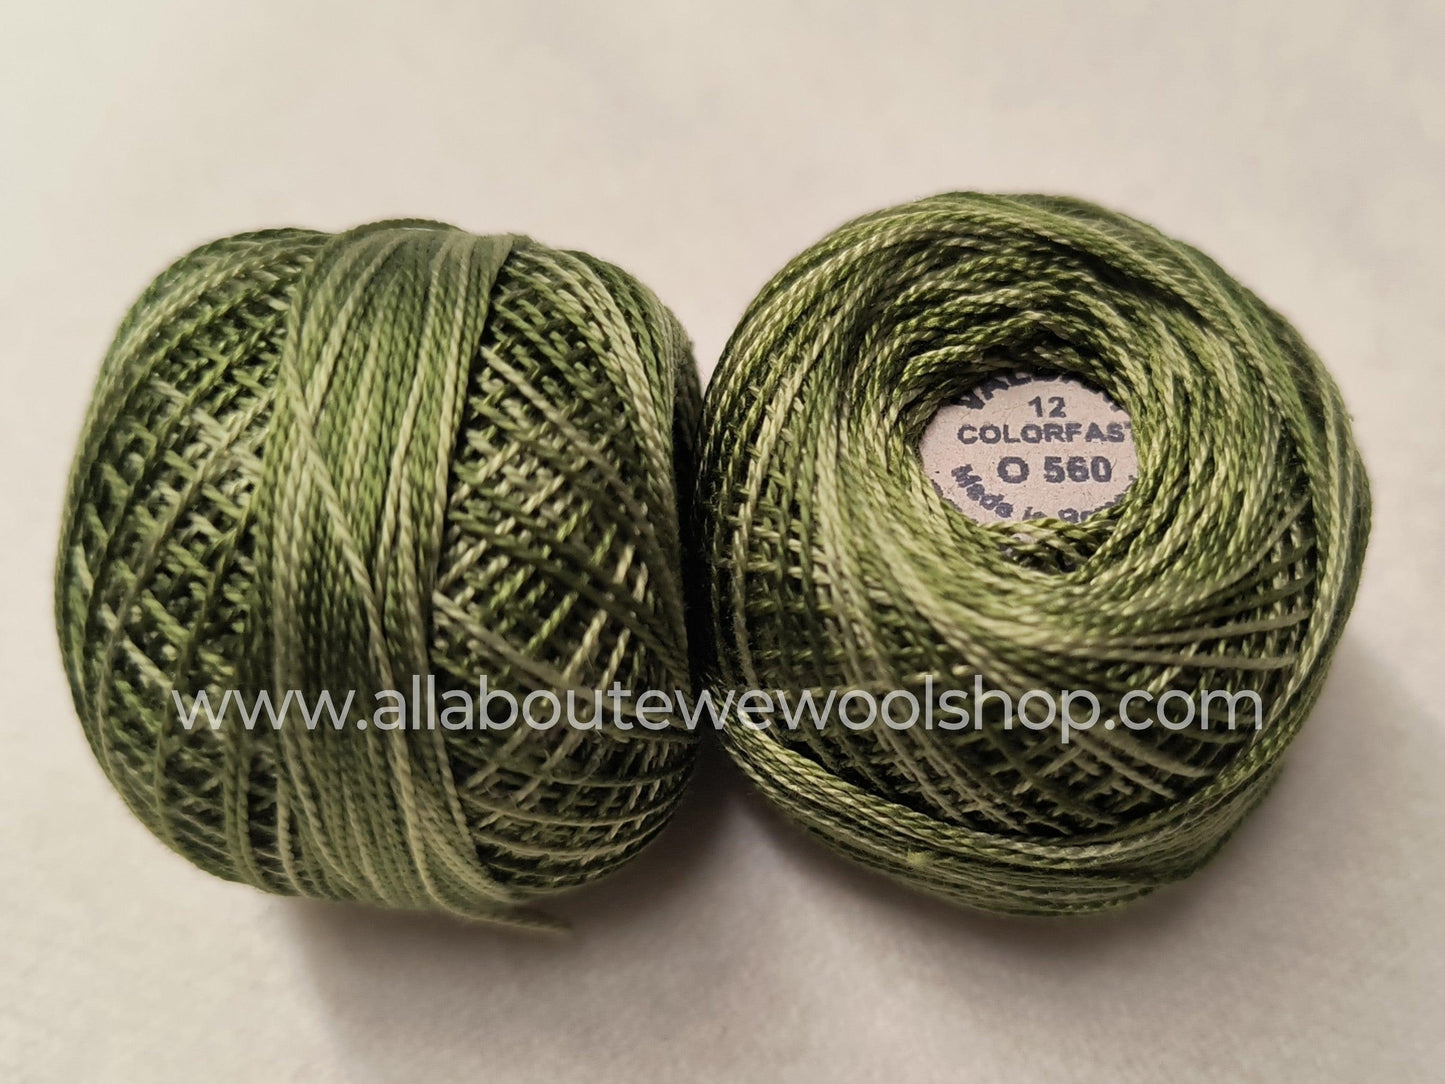 O560 #12 Valdani Pearl/Perle Cotton Thread - All About Ewe Wool Shop